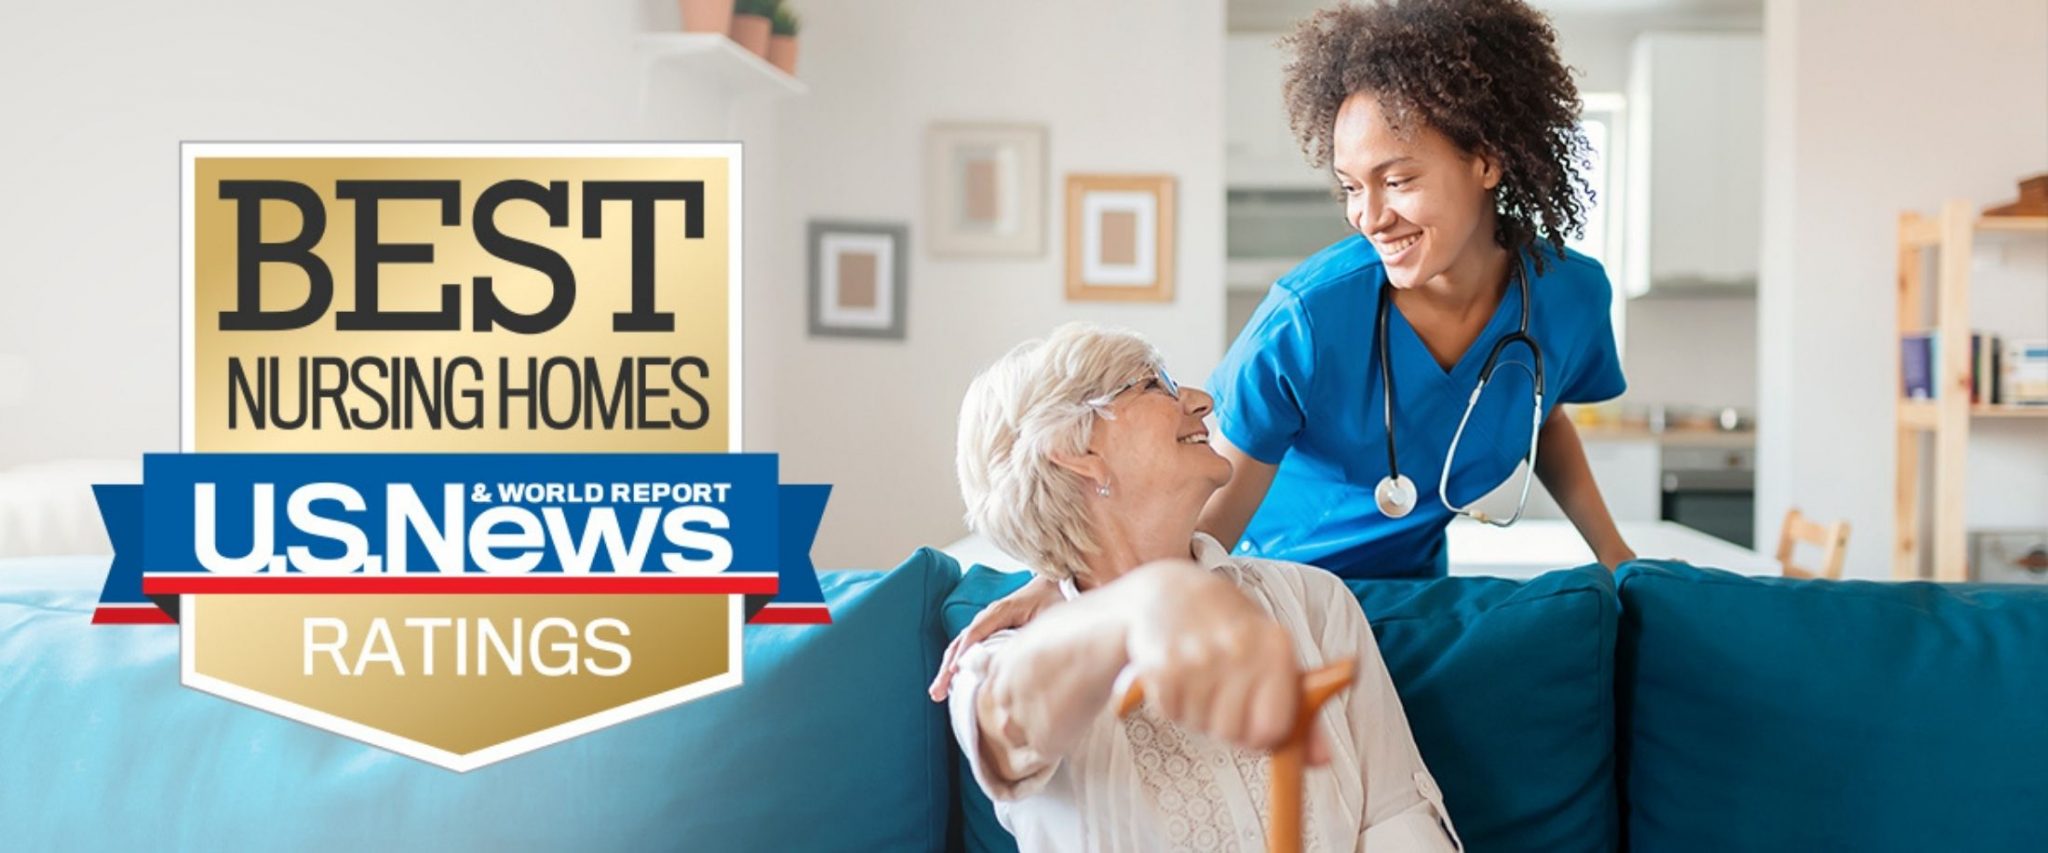 Best nursing homes award